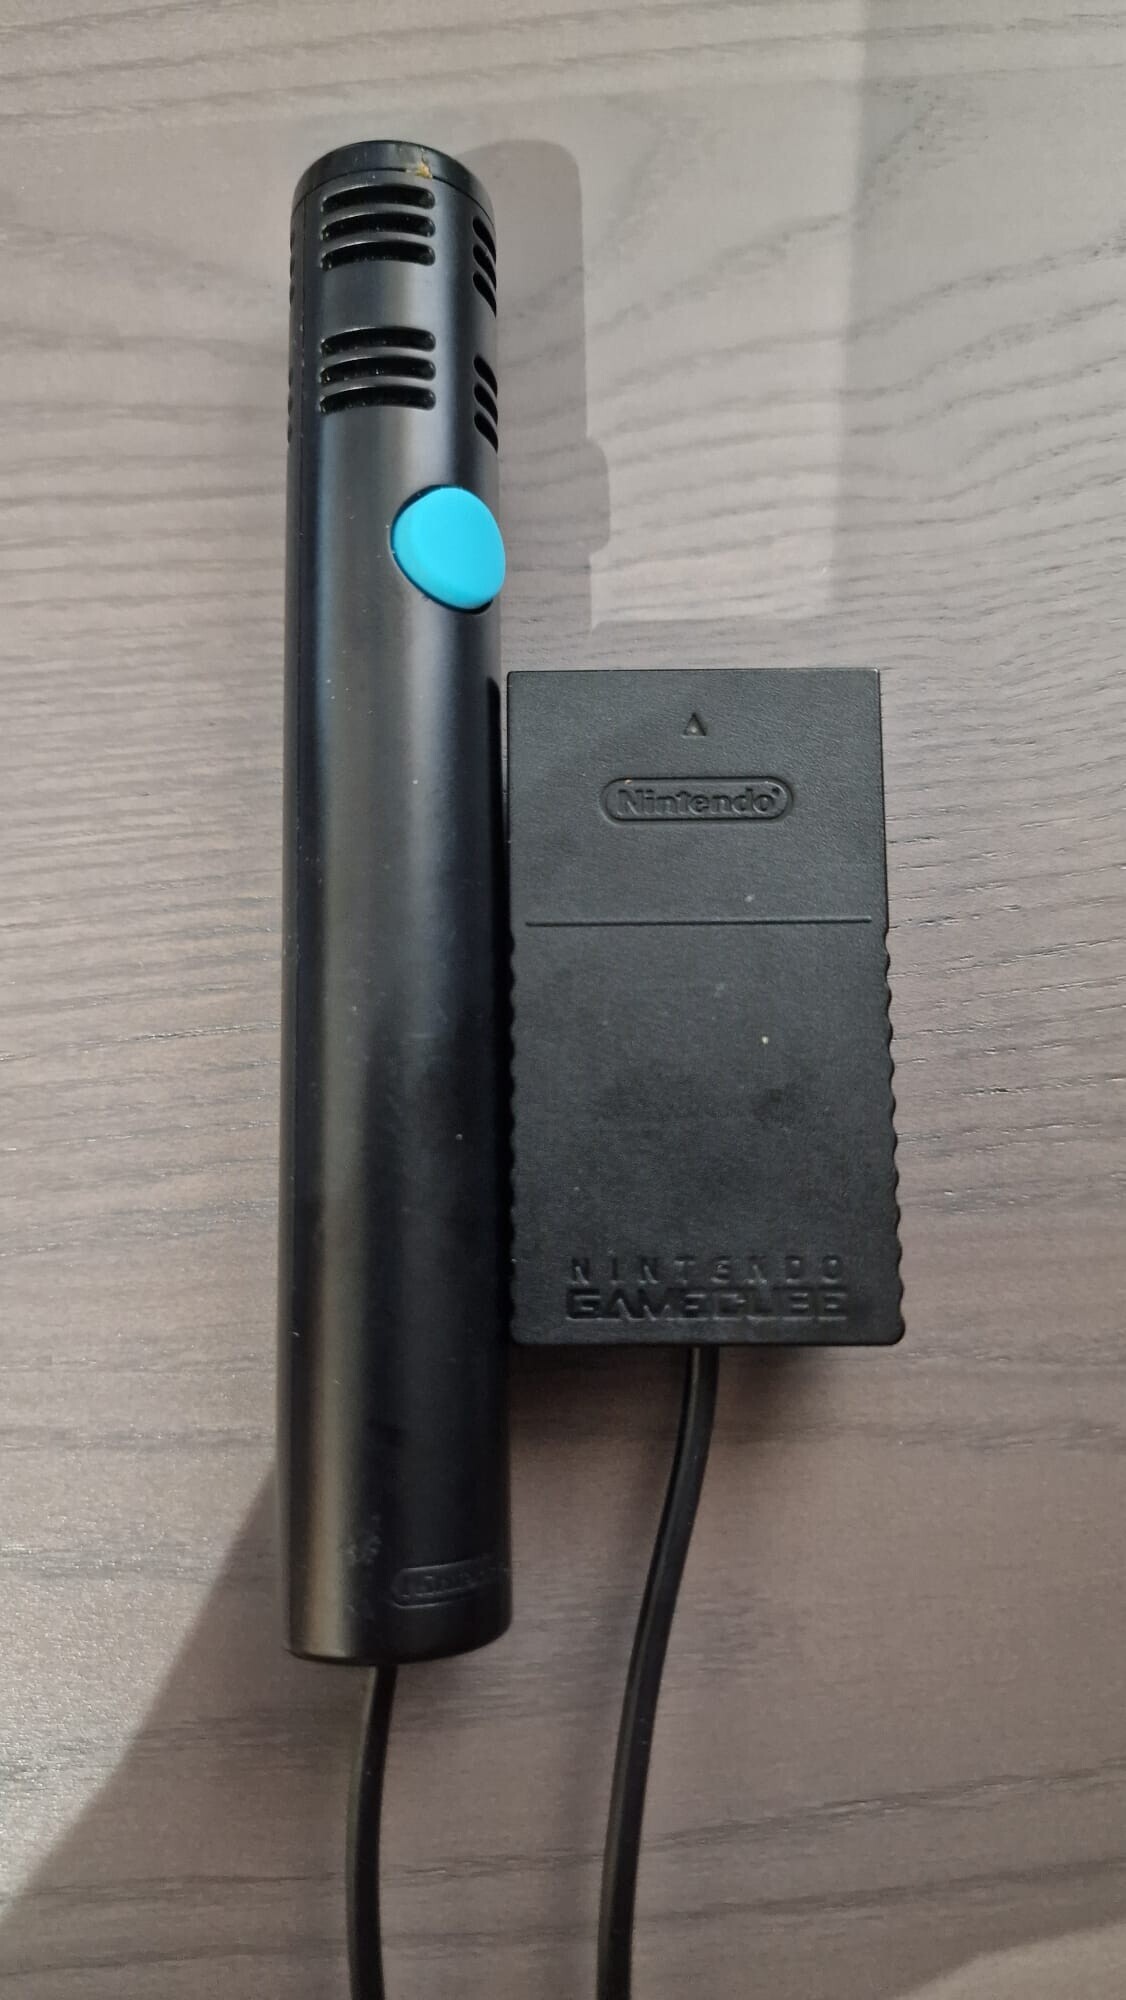  Nintendo Gamecube Black Microphone